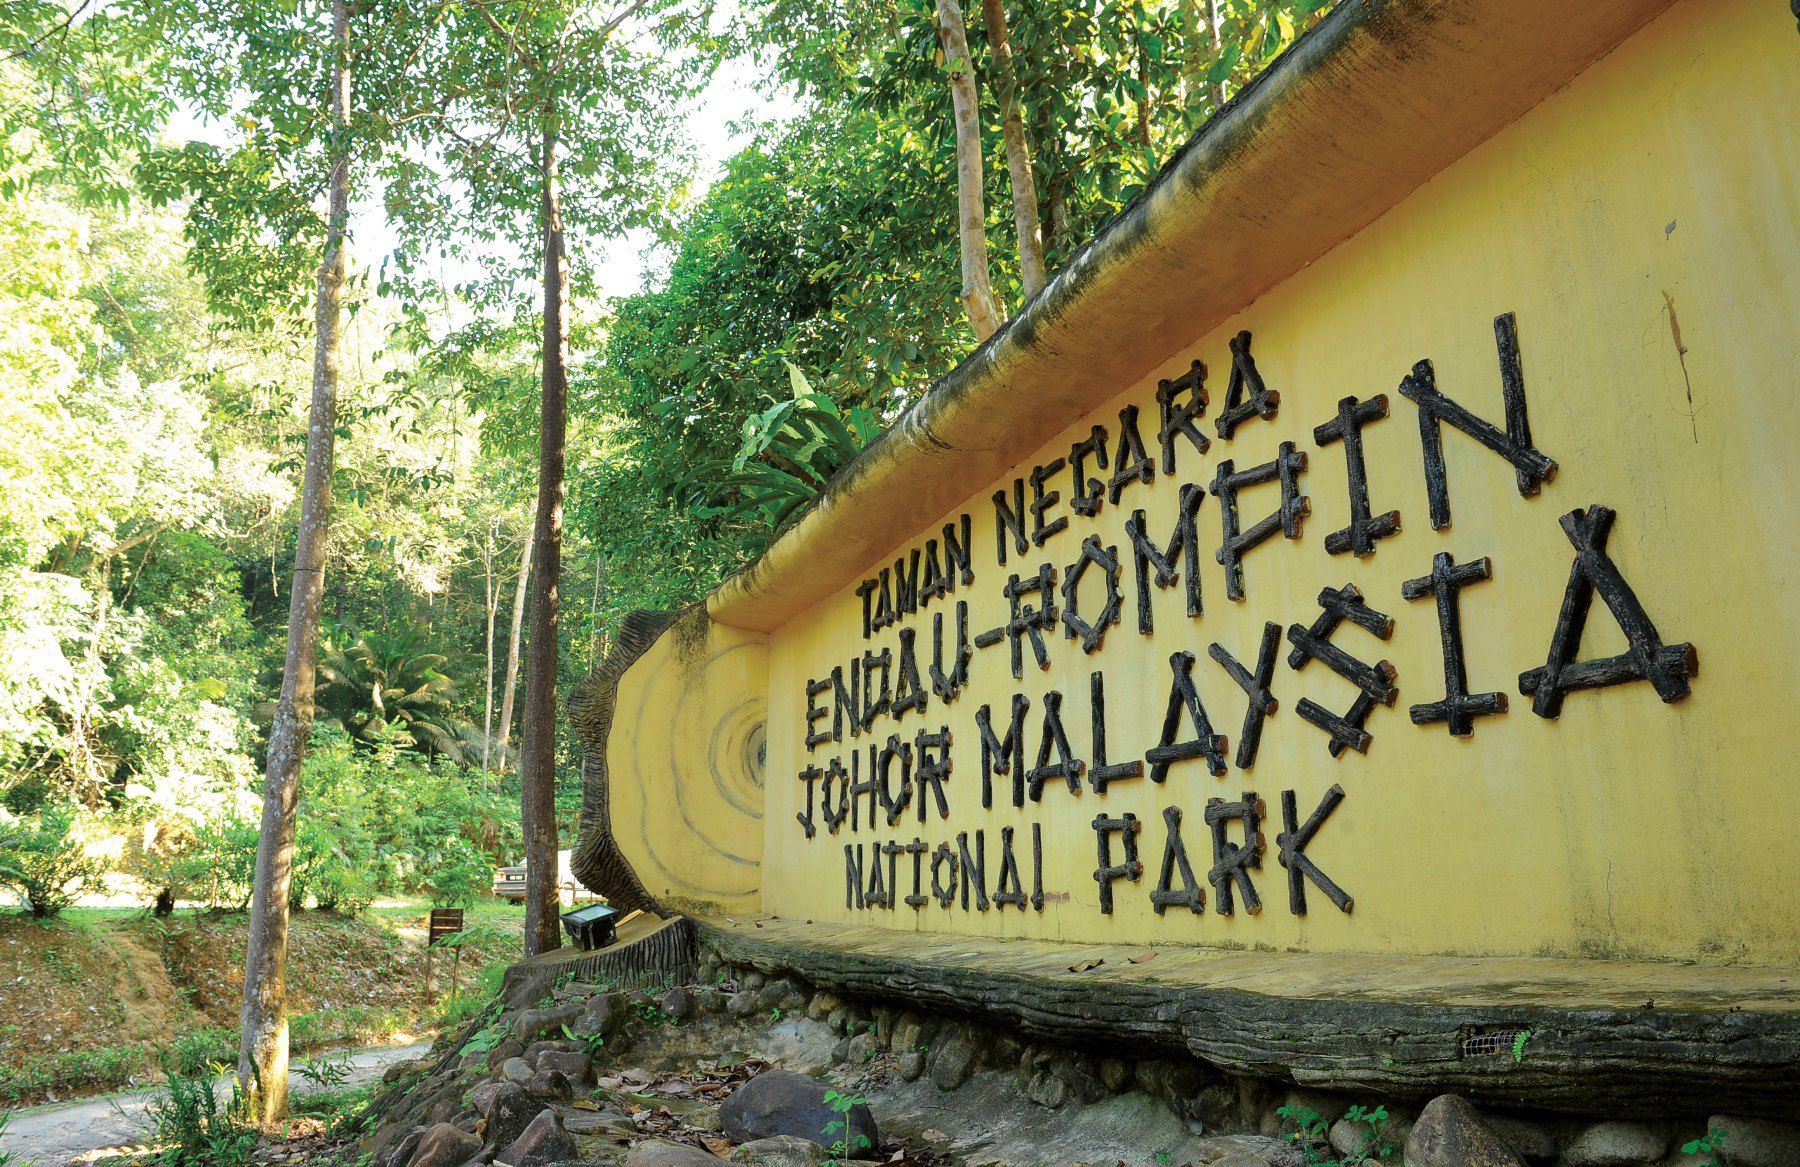 Endau-Rompin National Park, Johor